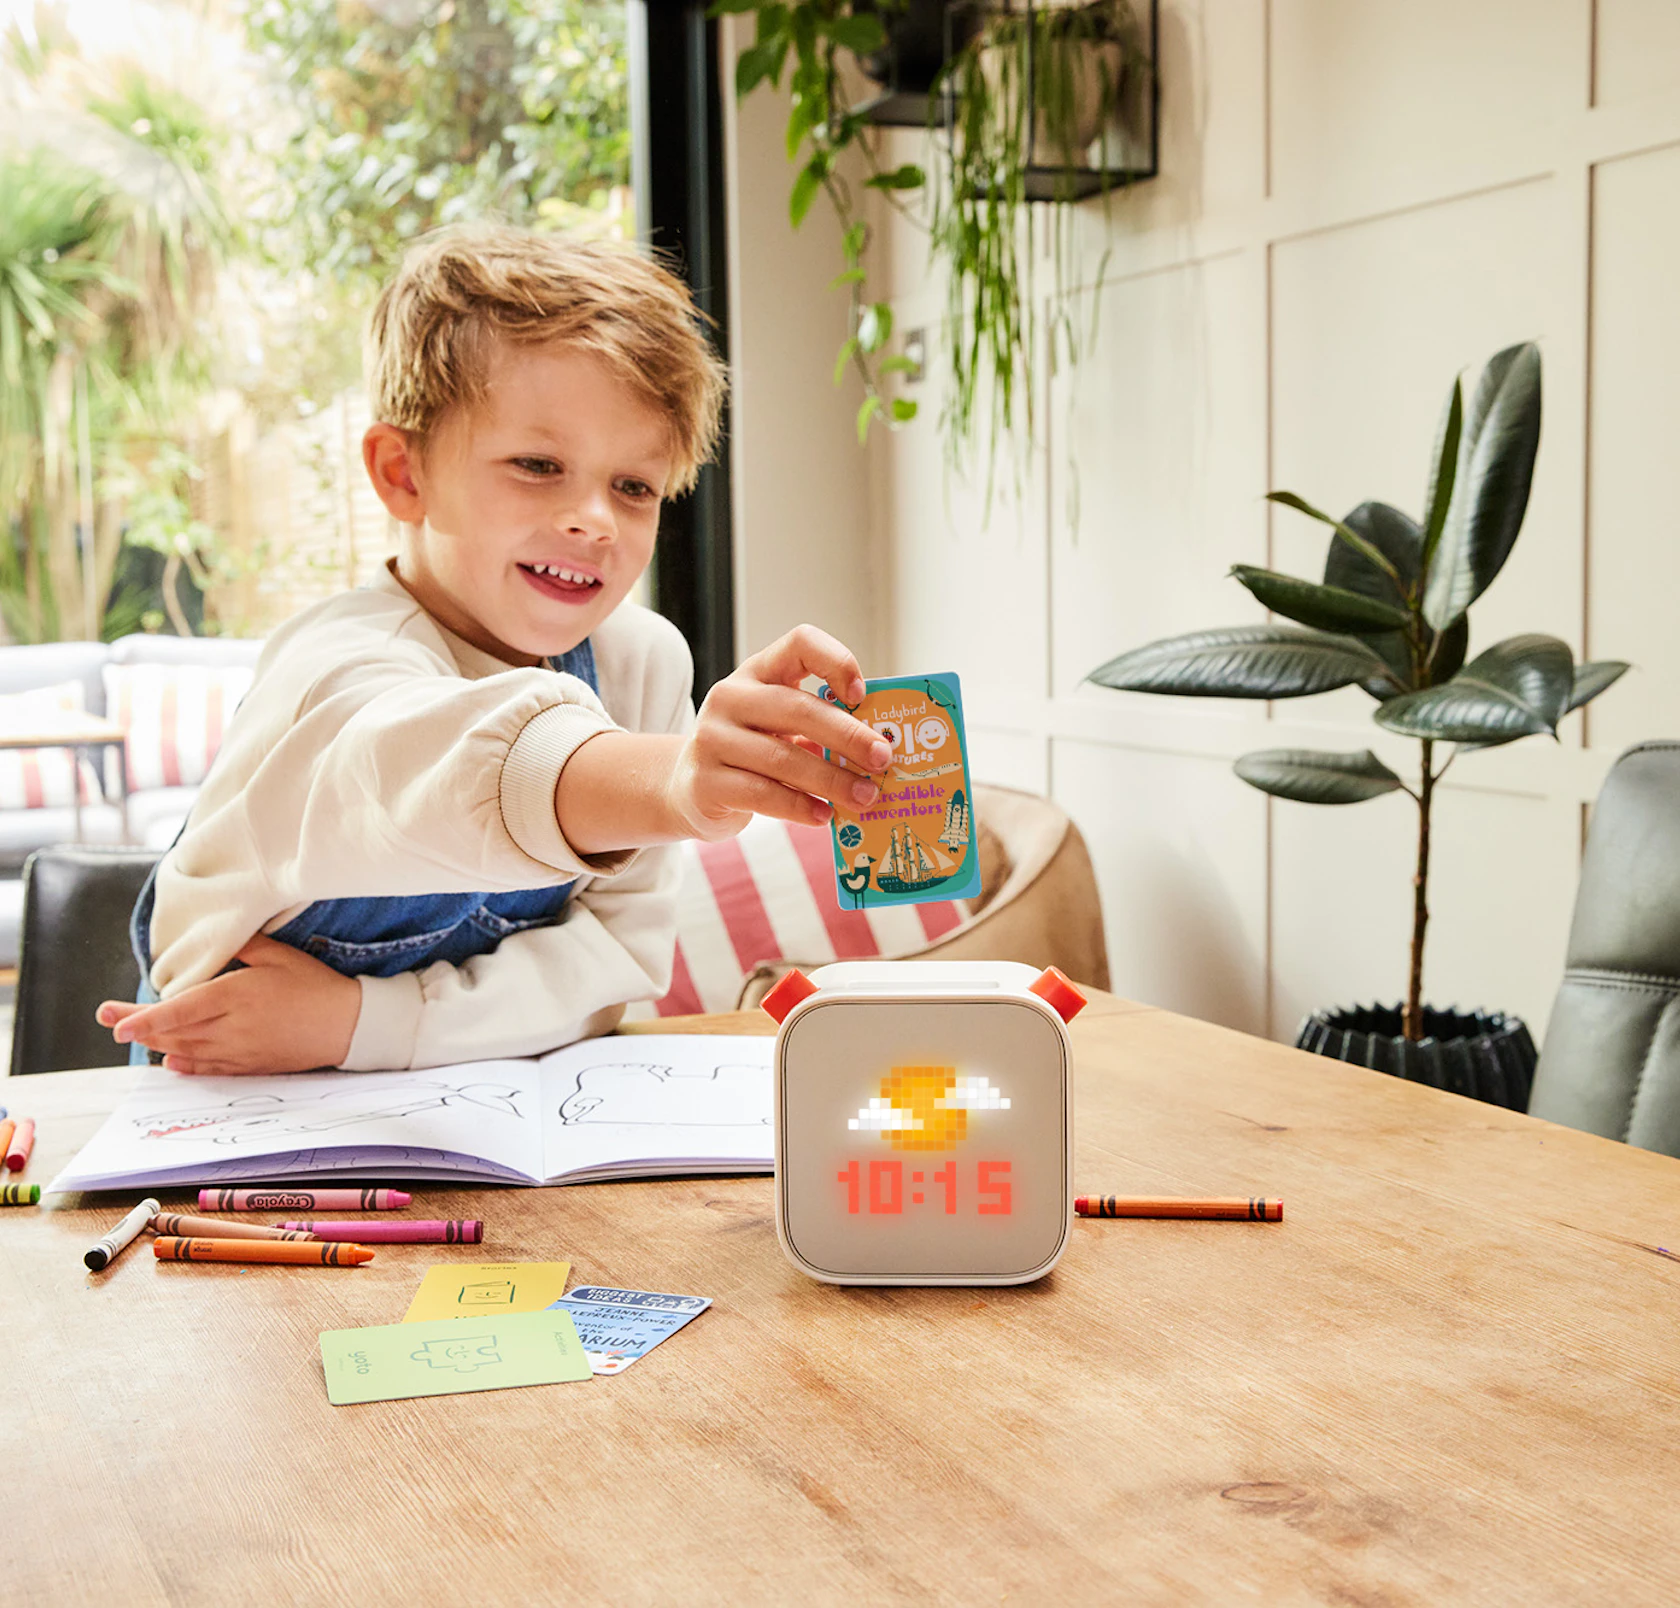 Yoto Mini Player USA – The On The Go Mini Audio Companion For Kids